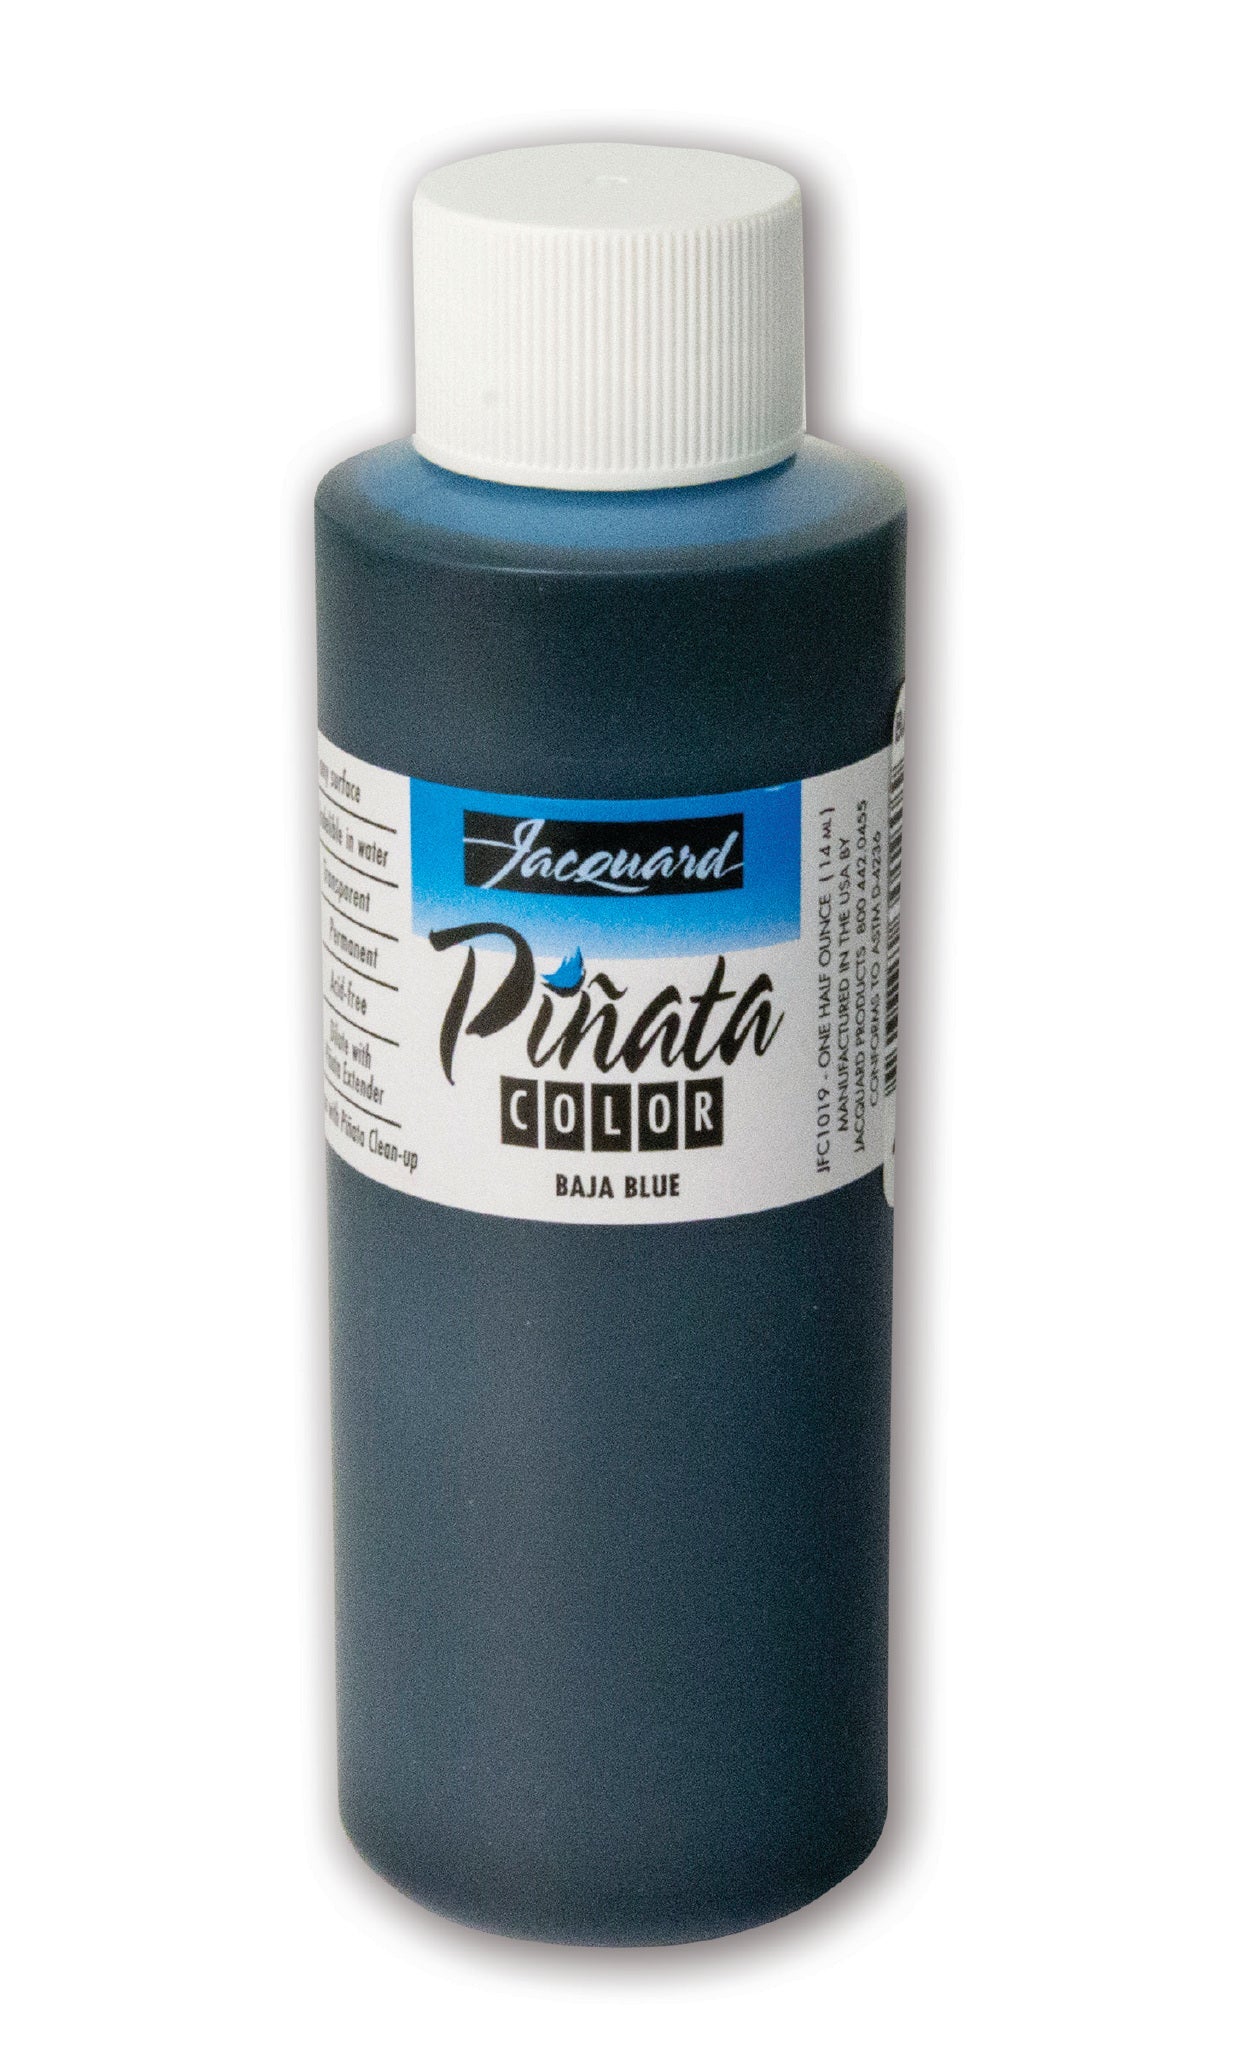 Jacquard Pinata Ink 120ml Baja Blue - theartshop.com.au